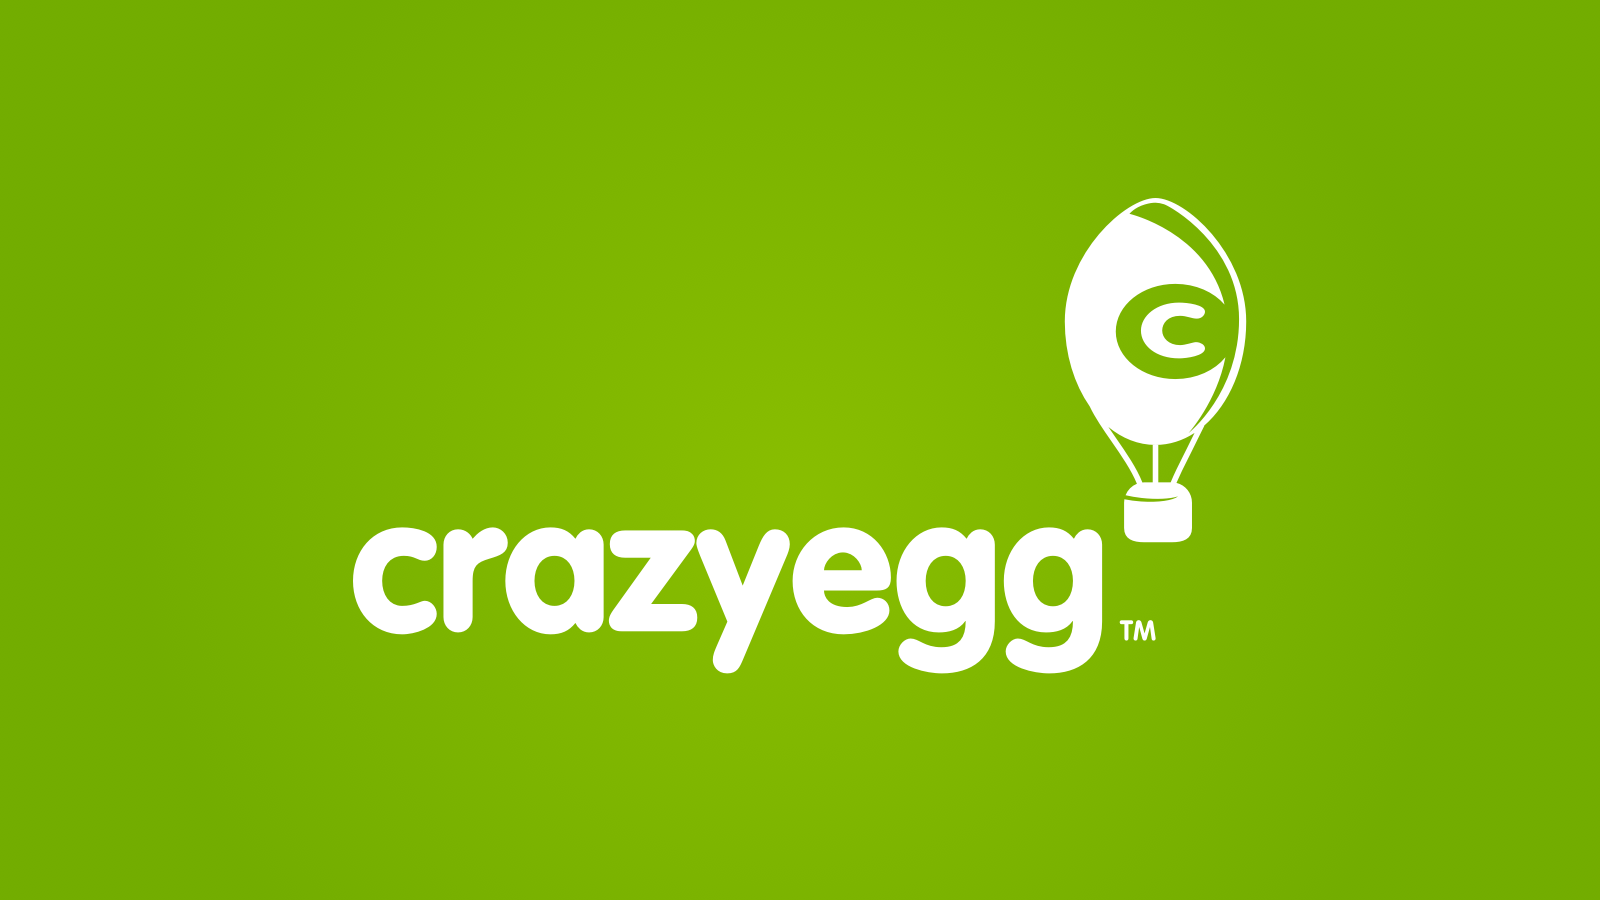 Creazyegg Marketing Analytics Tools